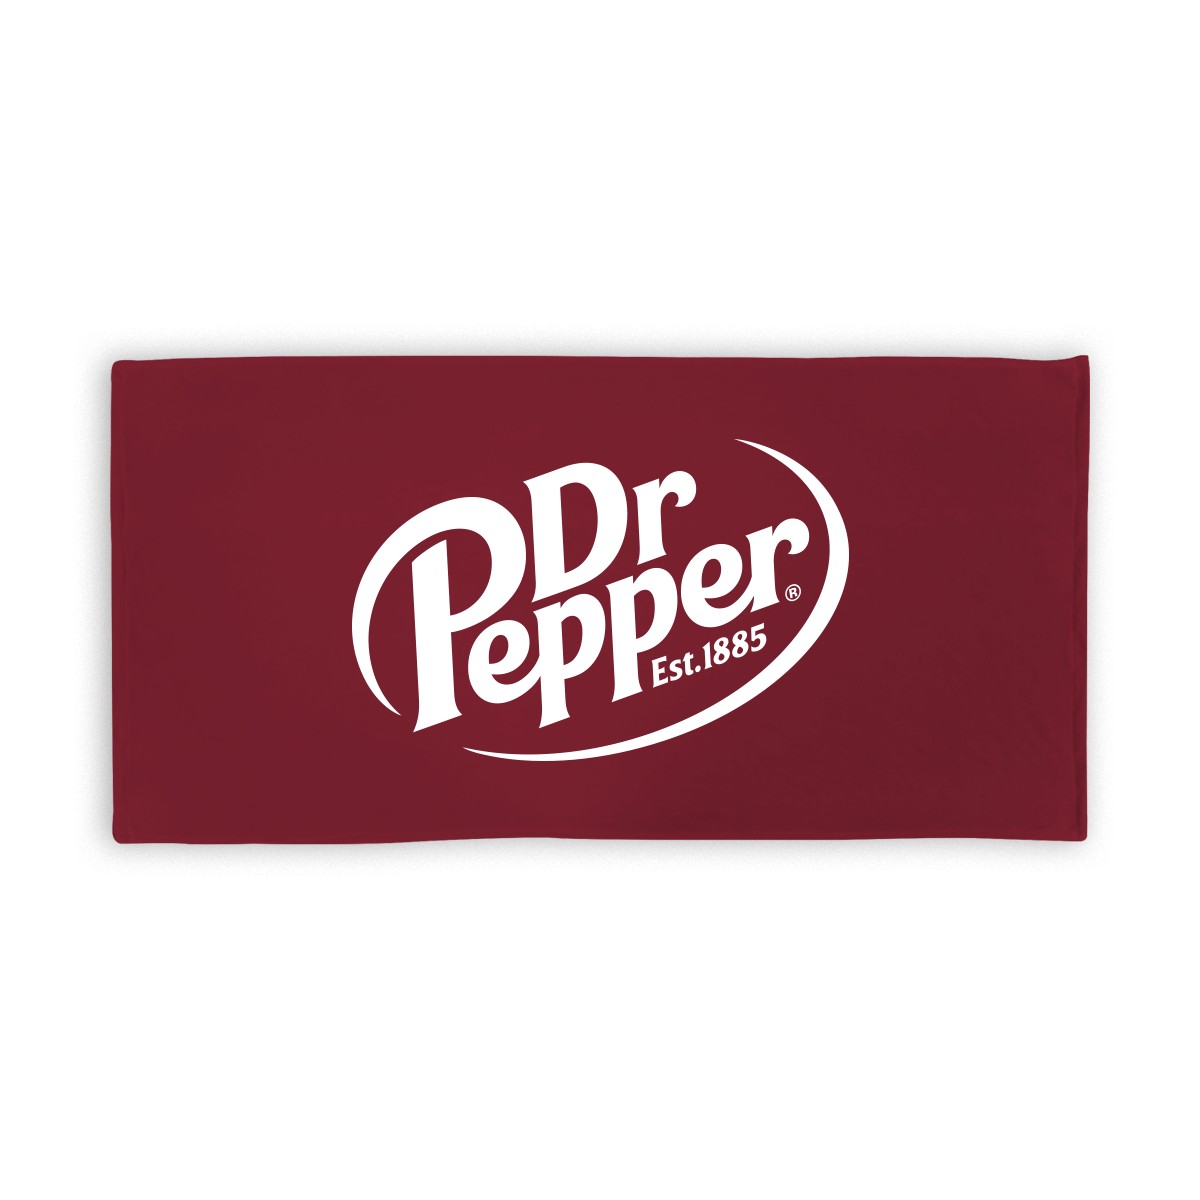 Dr Pepper Towel - Dr Pepper